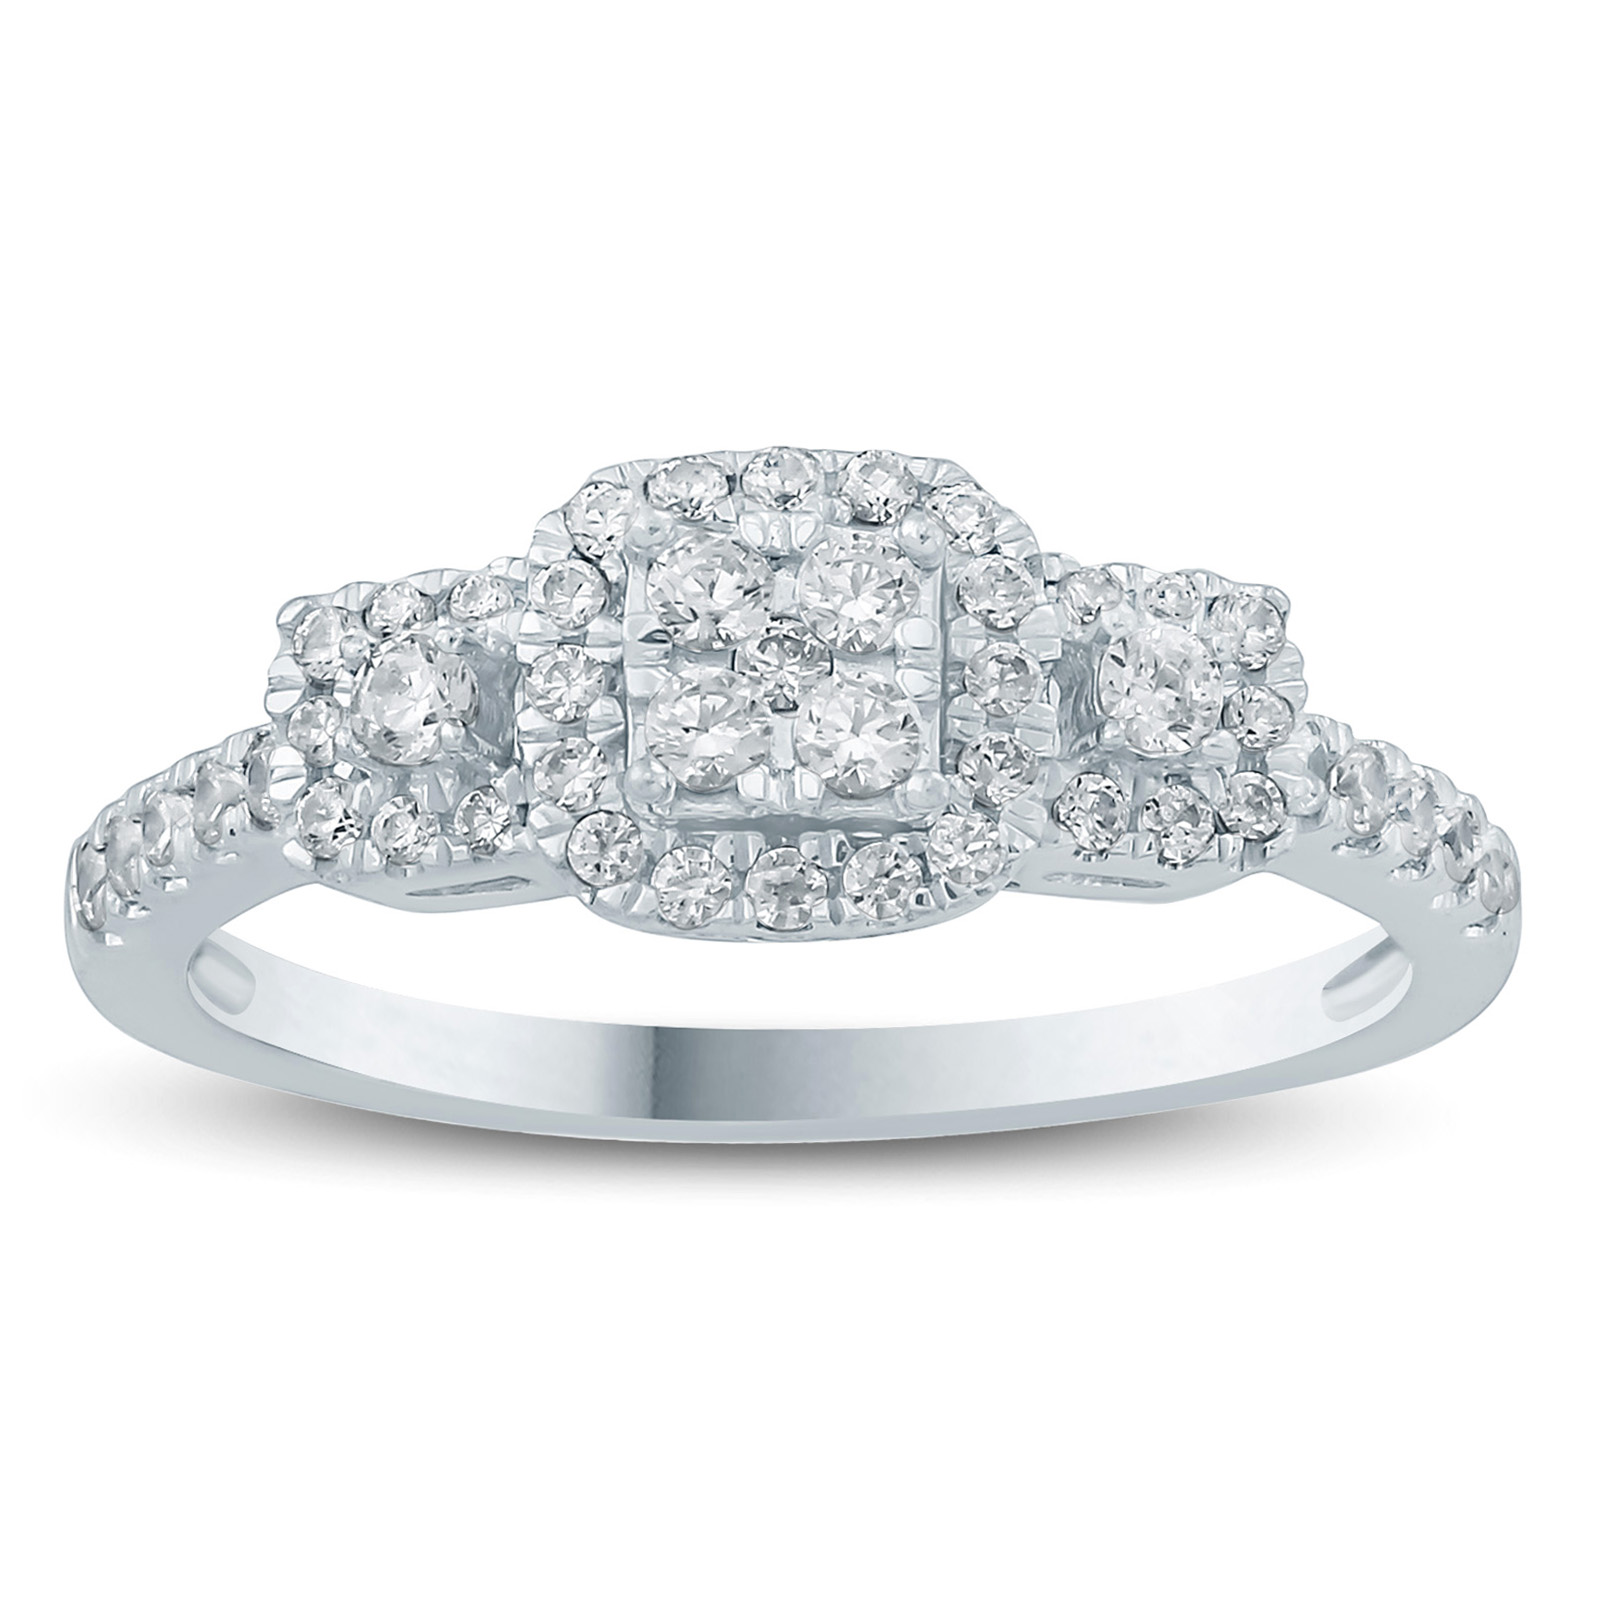 1/2 Carat TW Diamond Engagement Ring in 10K White Gold